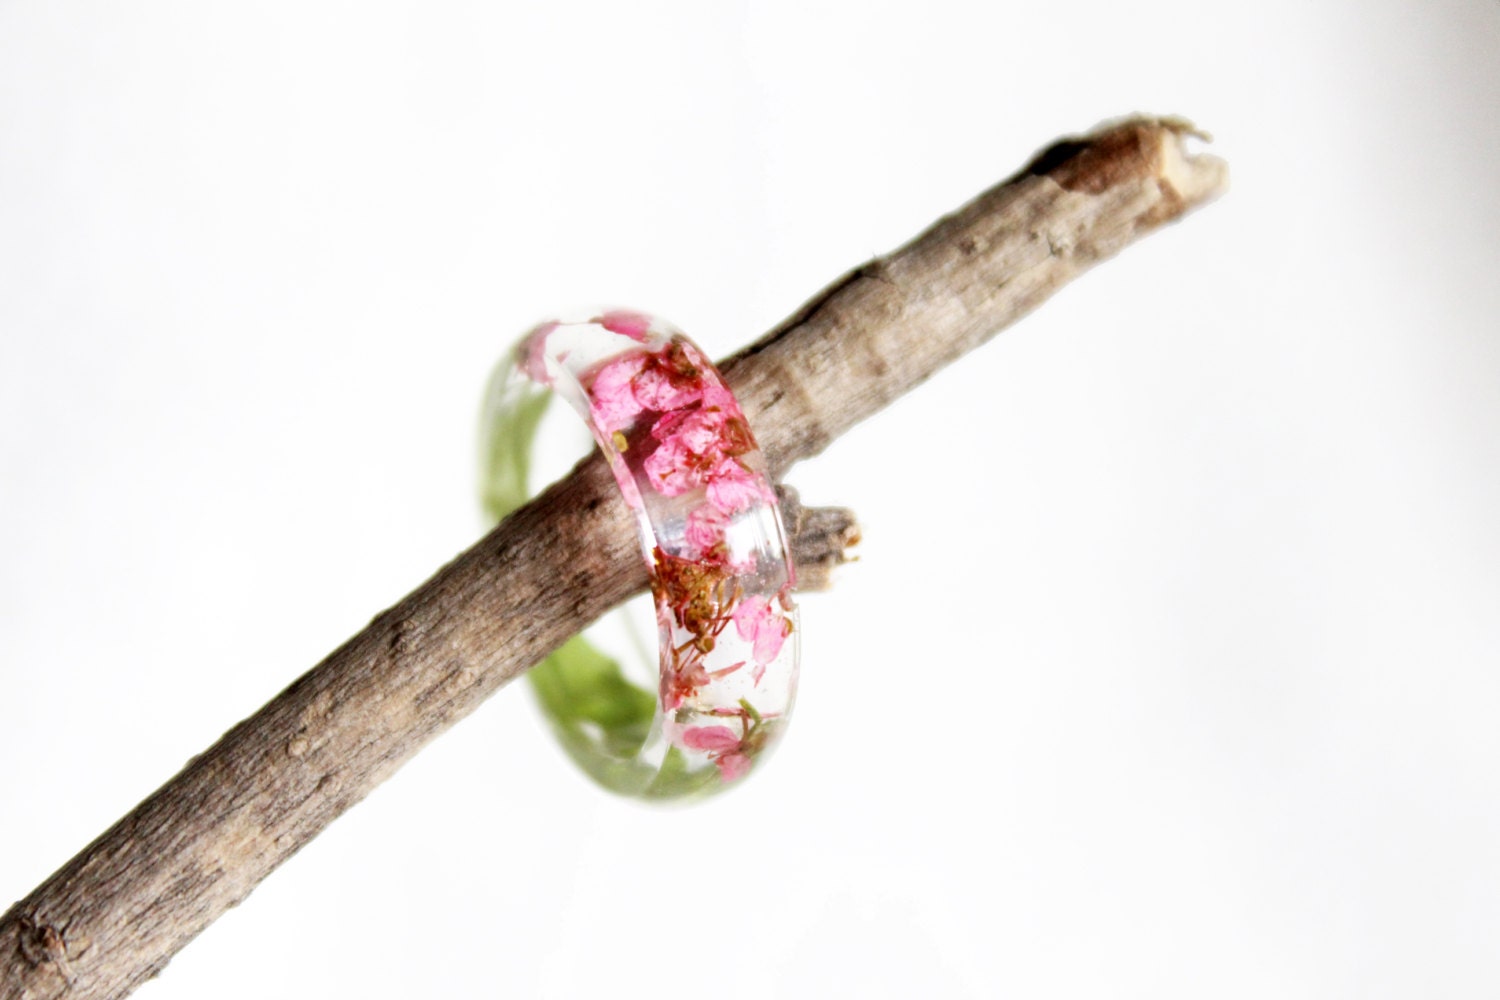 Pink Alyssum Flower Ring, Resin Ring, Flower Jewelry, Resin Jewelry, Dried Flowers, Resin Flower Jewelry, Nature Ring, Botanical Jewelry